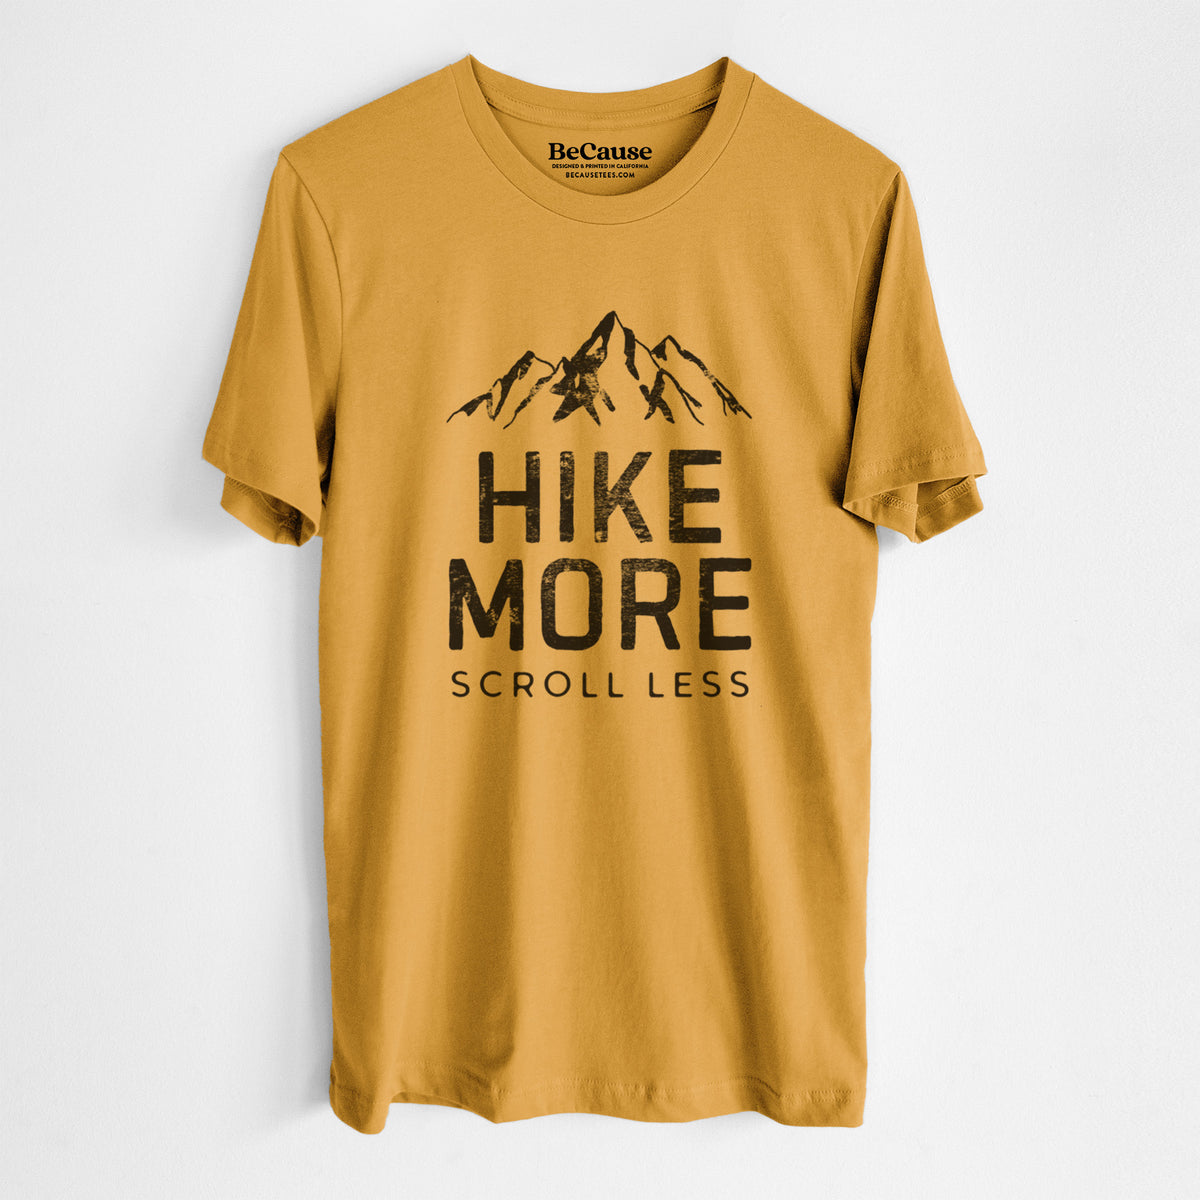 Hike More - Scroll Less - Lightweight 100% Cotton Unisex Crewneck